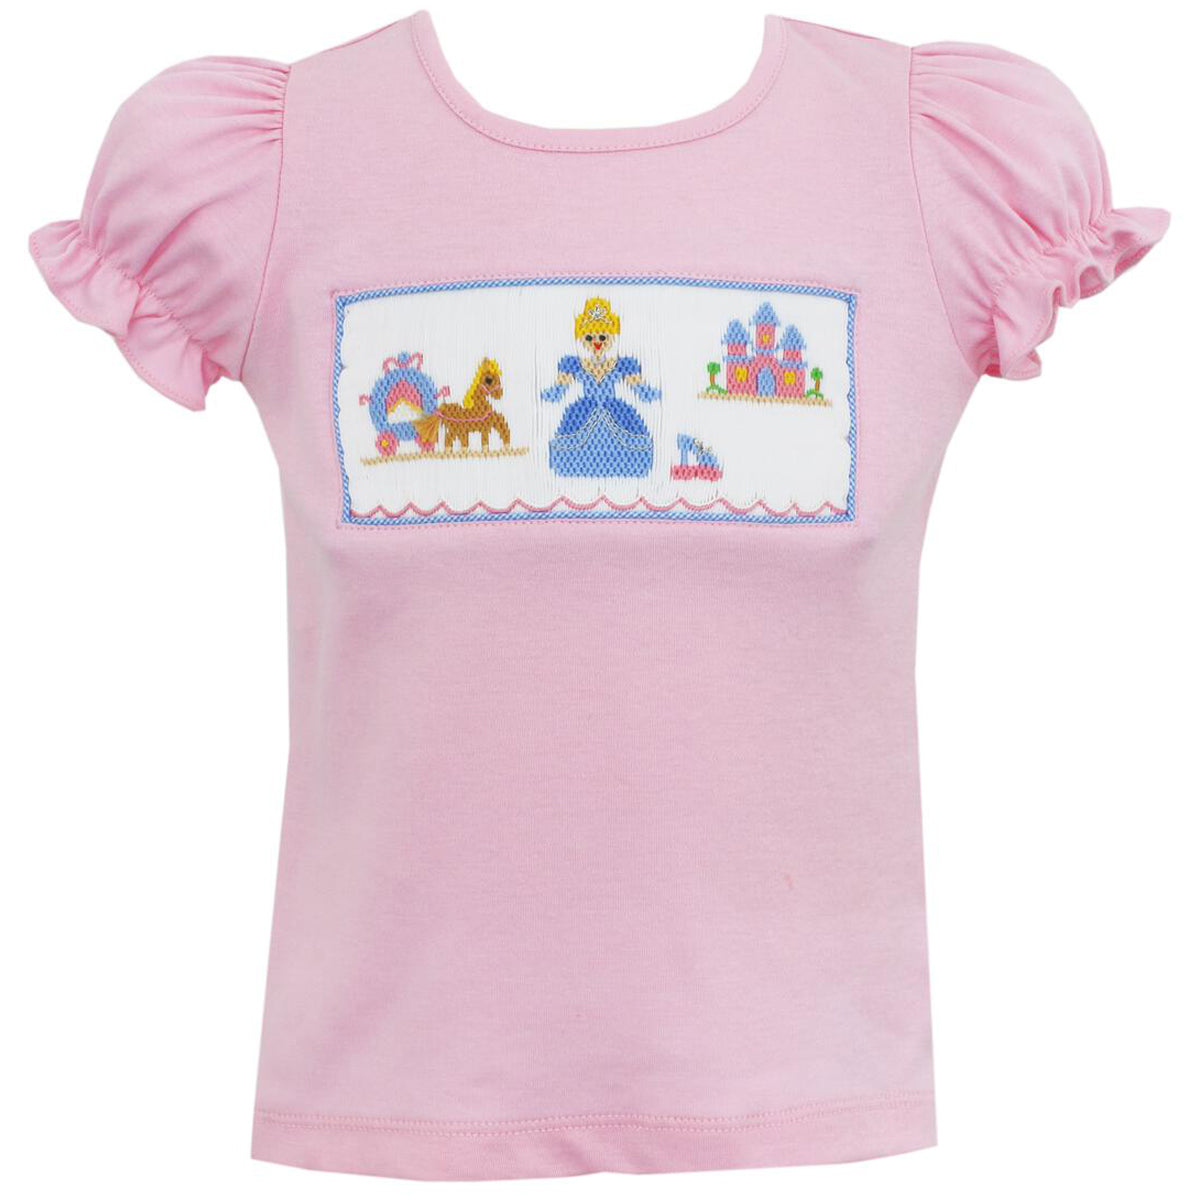 Girls Pink Knit Short Sleeve T-Shirt - Cinderella